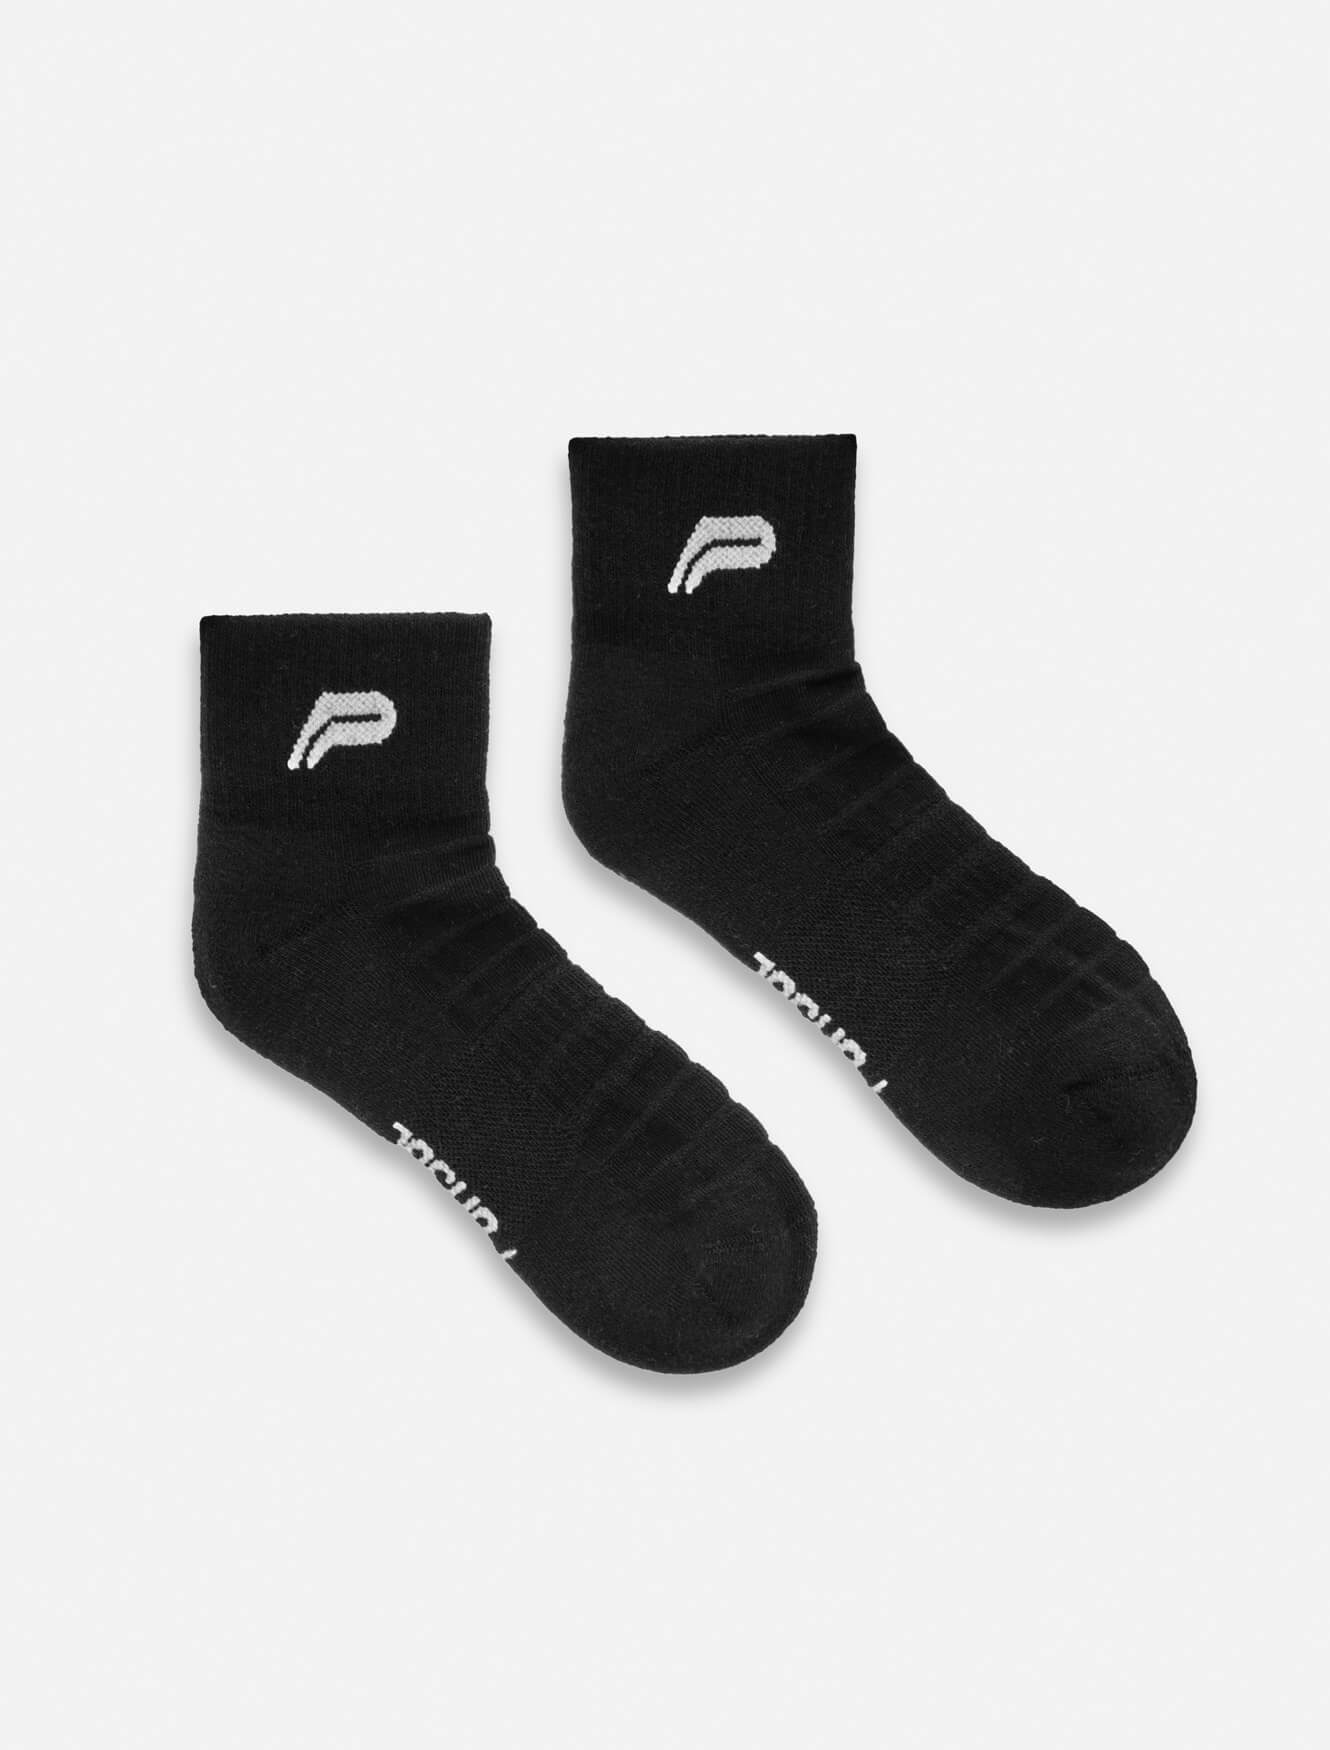 Premium Cushioned Running Socks / Black Pursue Fitness 1